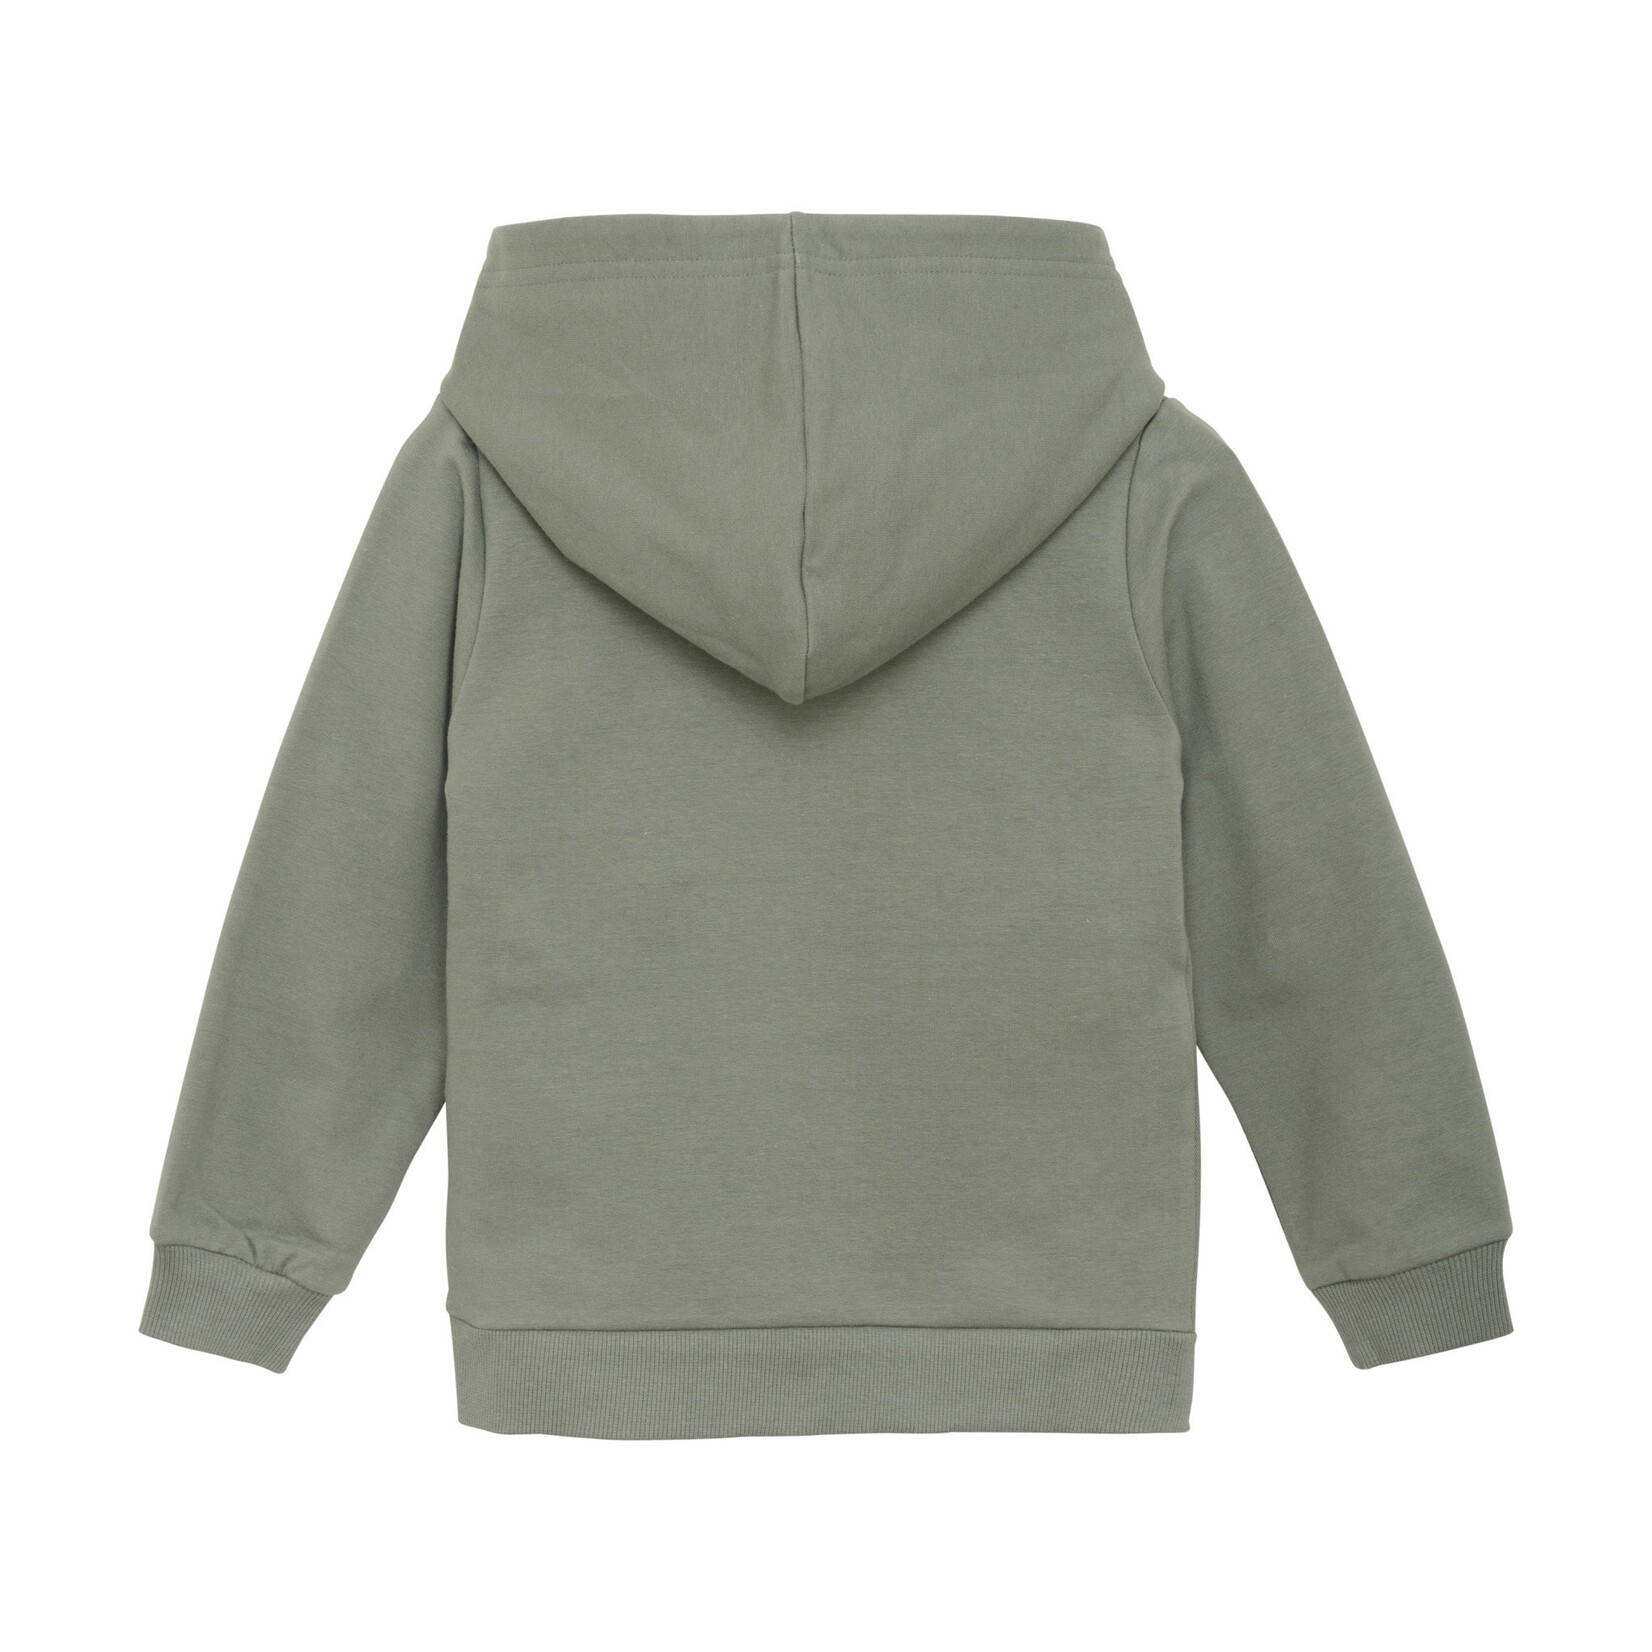 Enfant ENFANT - Lightweight hooded cotton sweater with verdigris